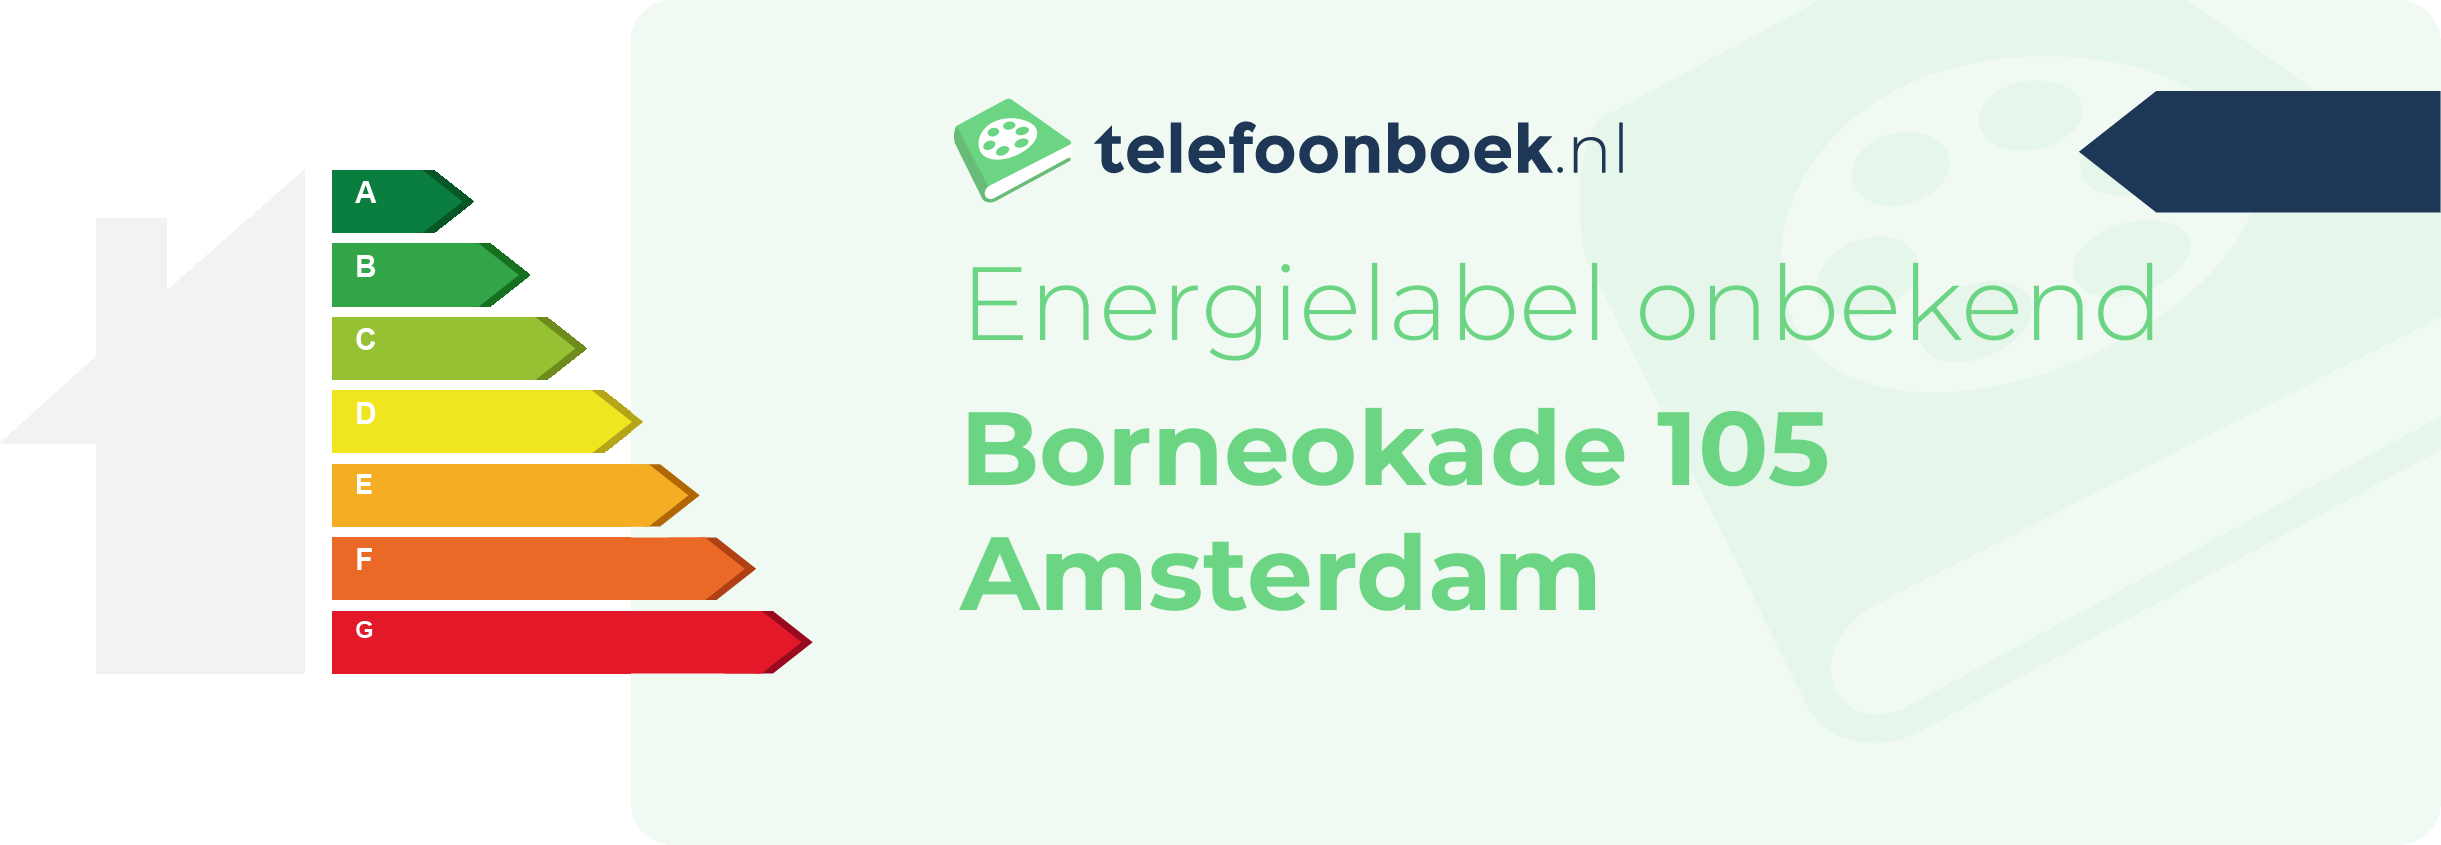 Energielabel Borneokade 105 Amsterdam